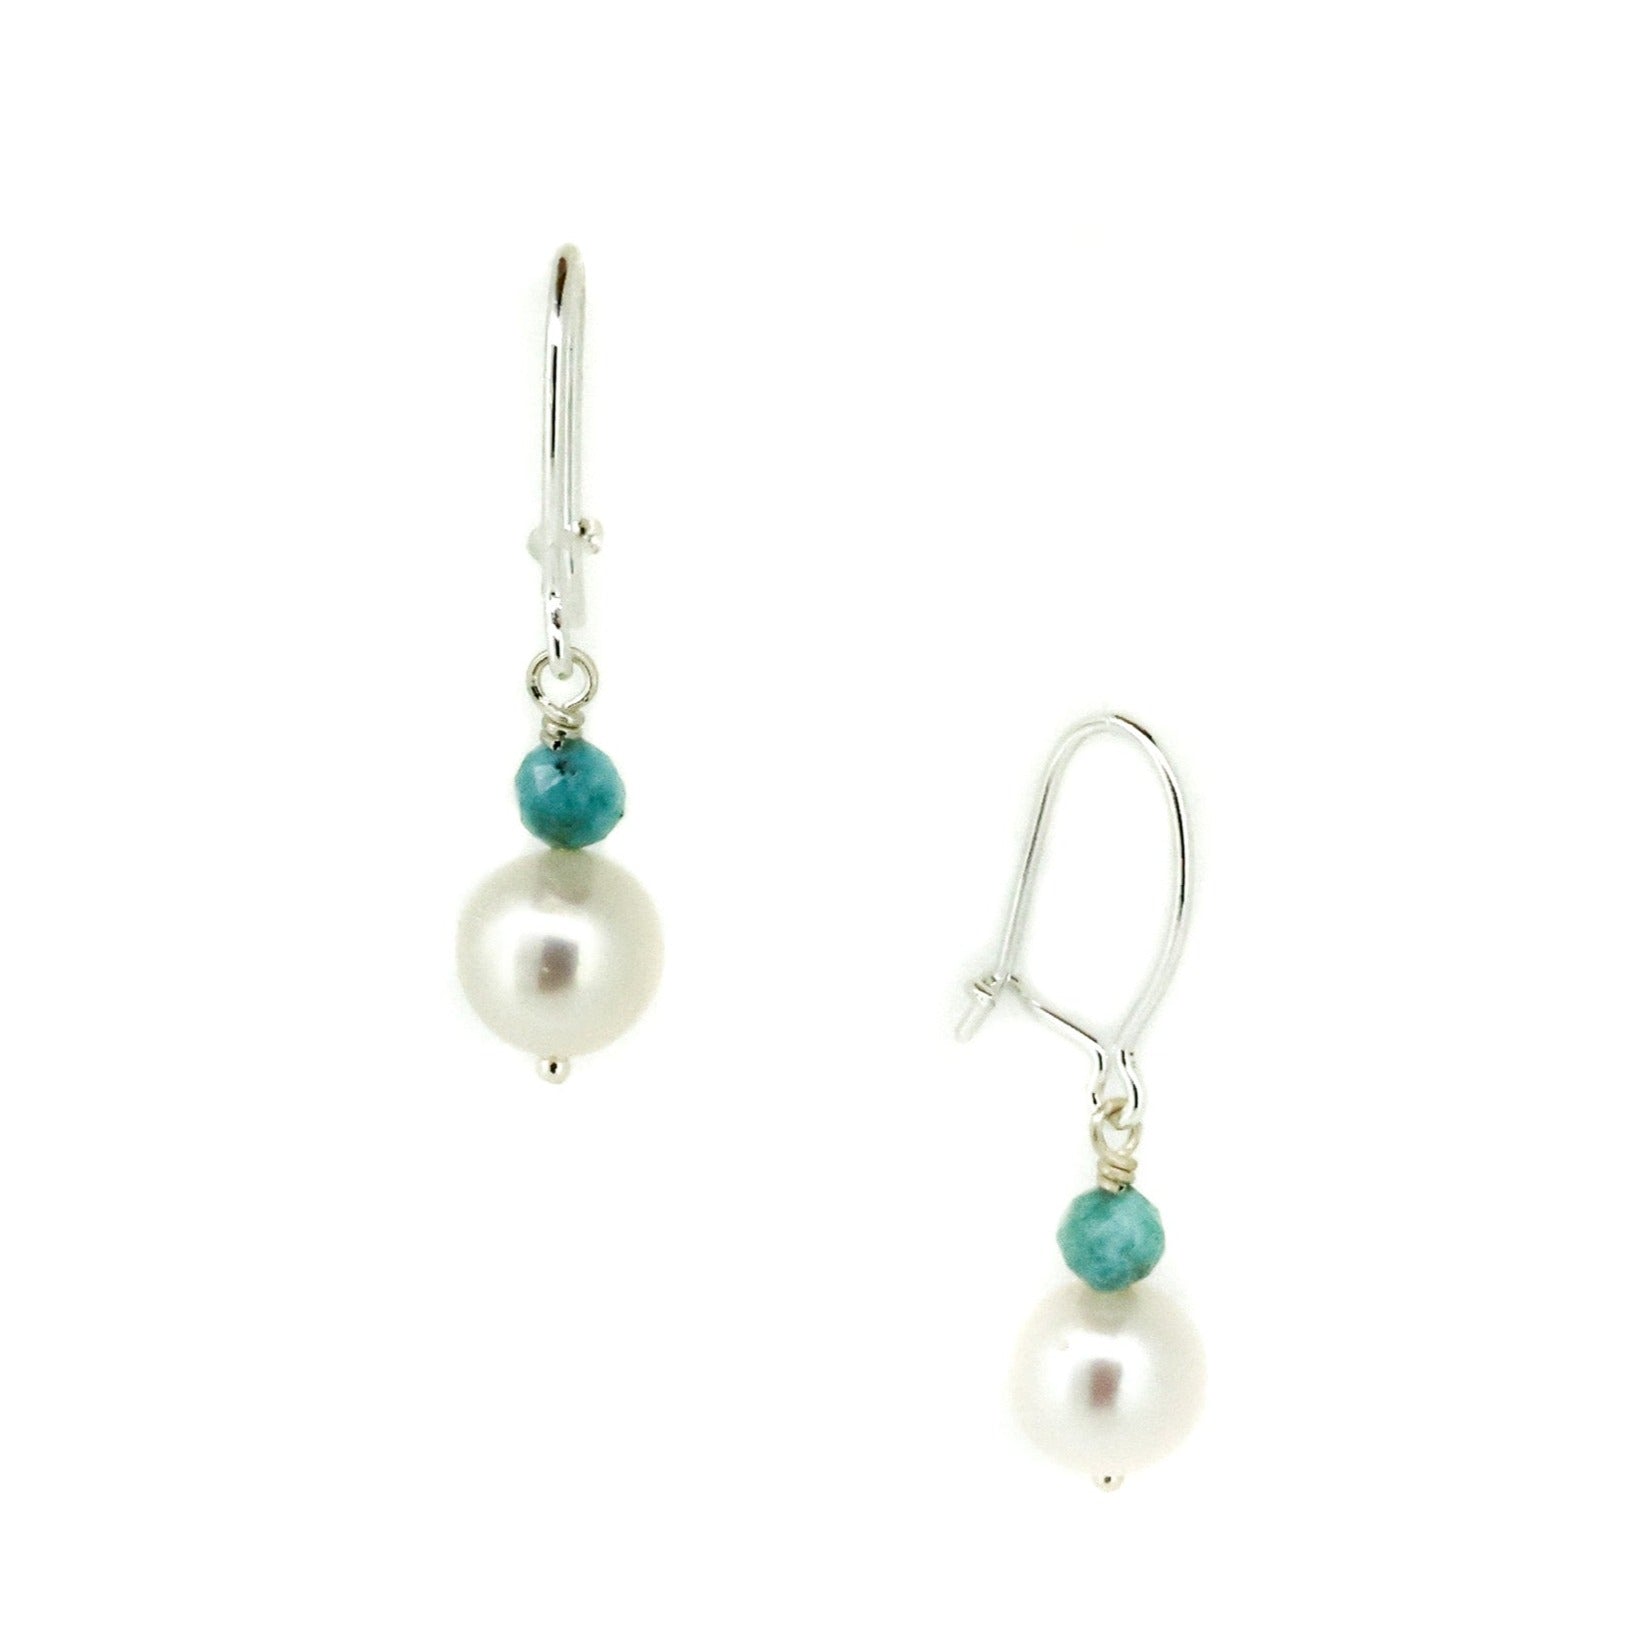 festival pearl earrings with larimar